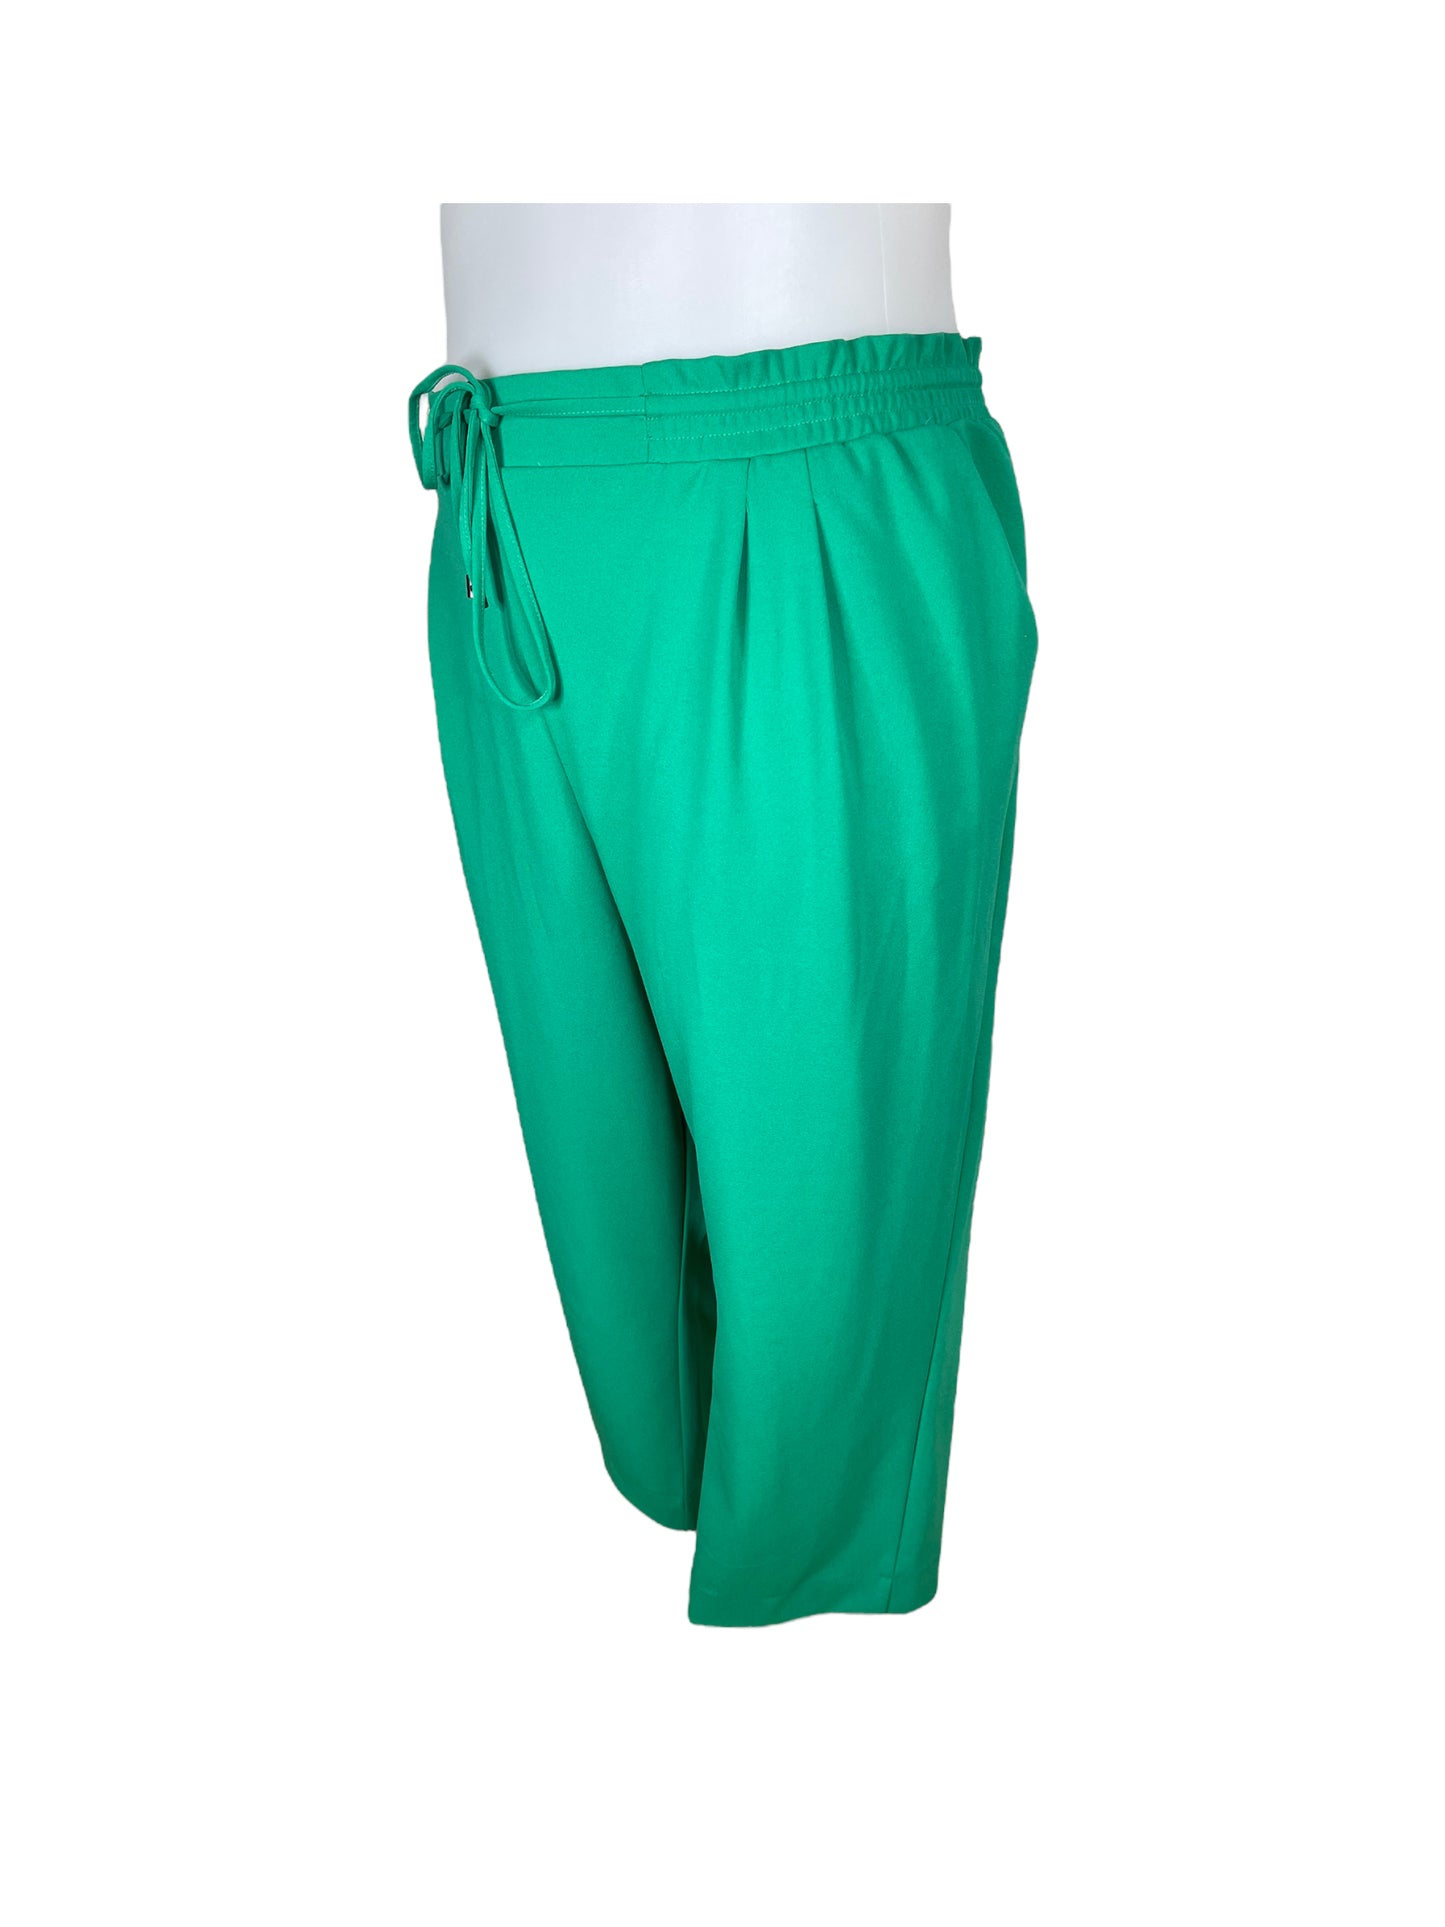 “Penningtons” Green Dress Pants w/ Tie (5X)